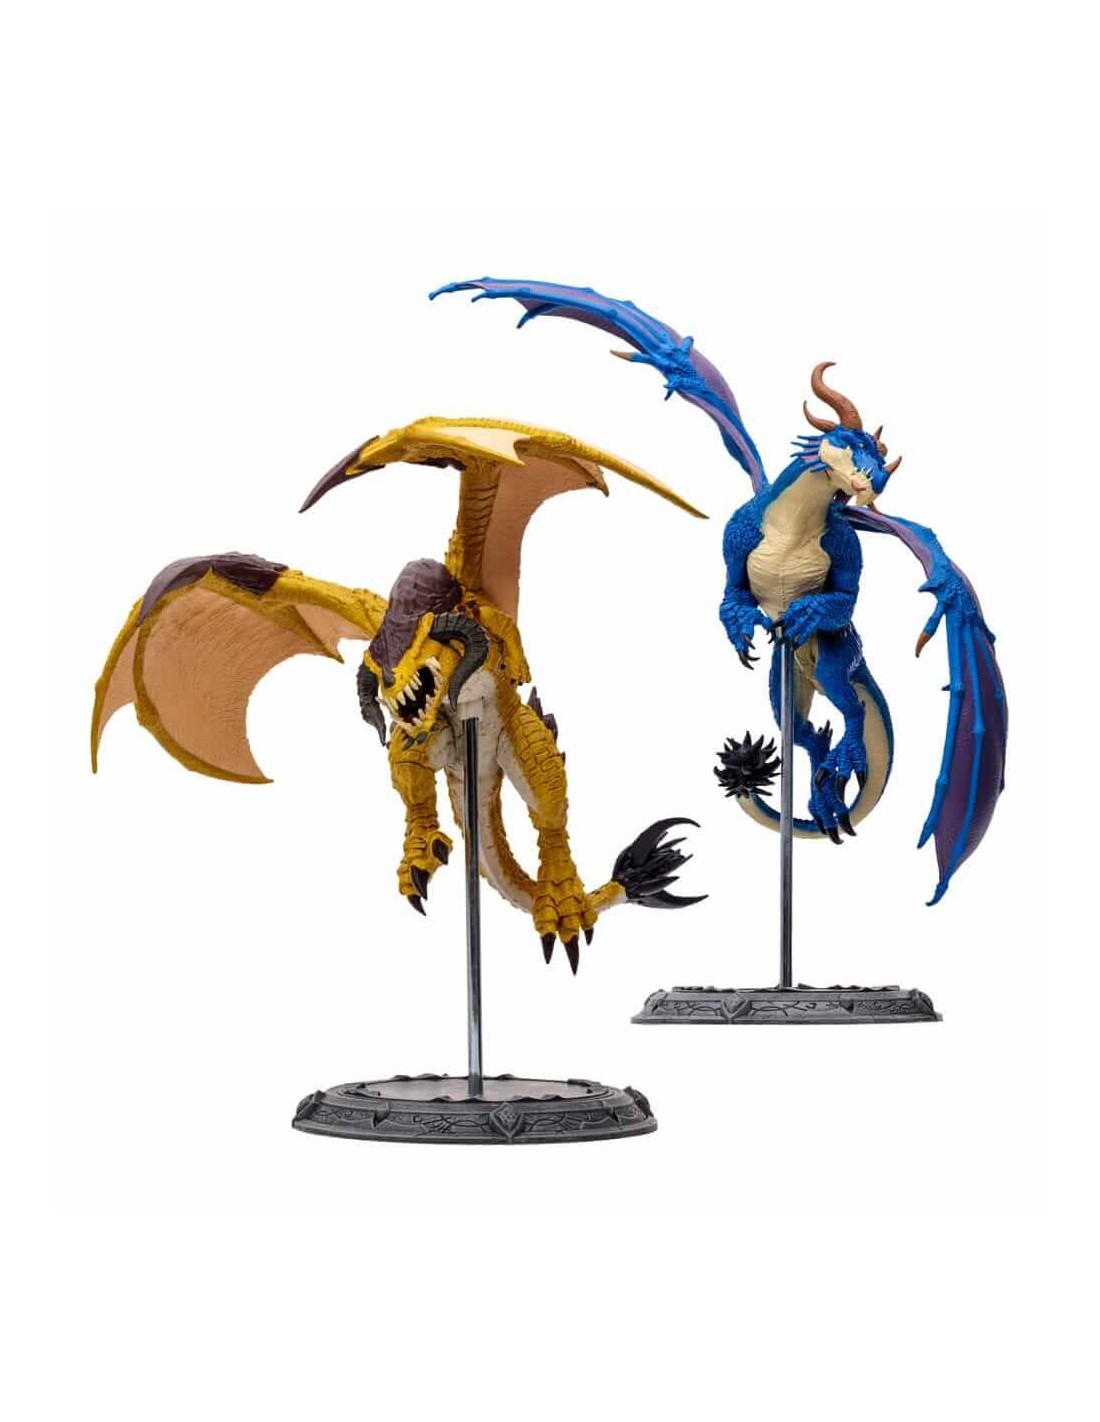 McFarlane Estatua: World Of Warcraft - Set Bronze Proto Drake y Blue Highland 2 Pack